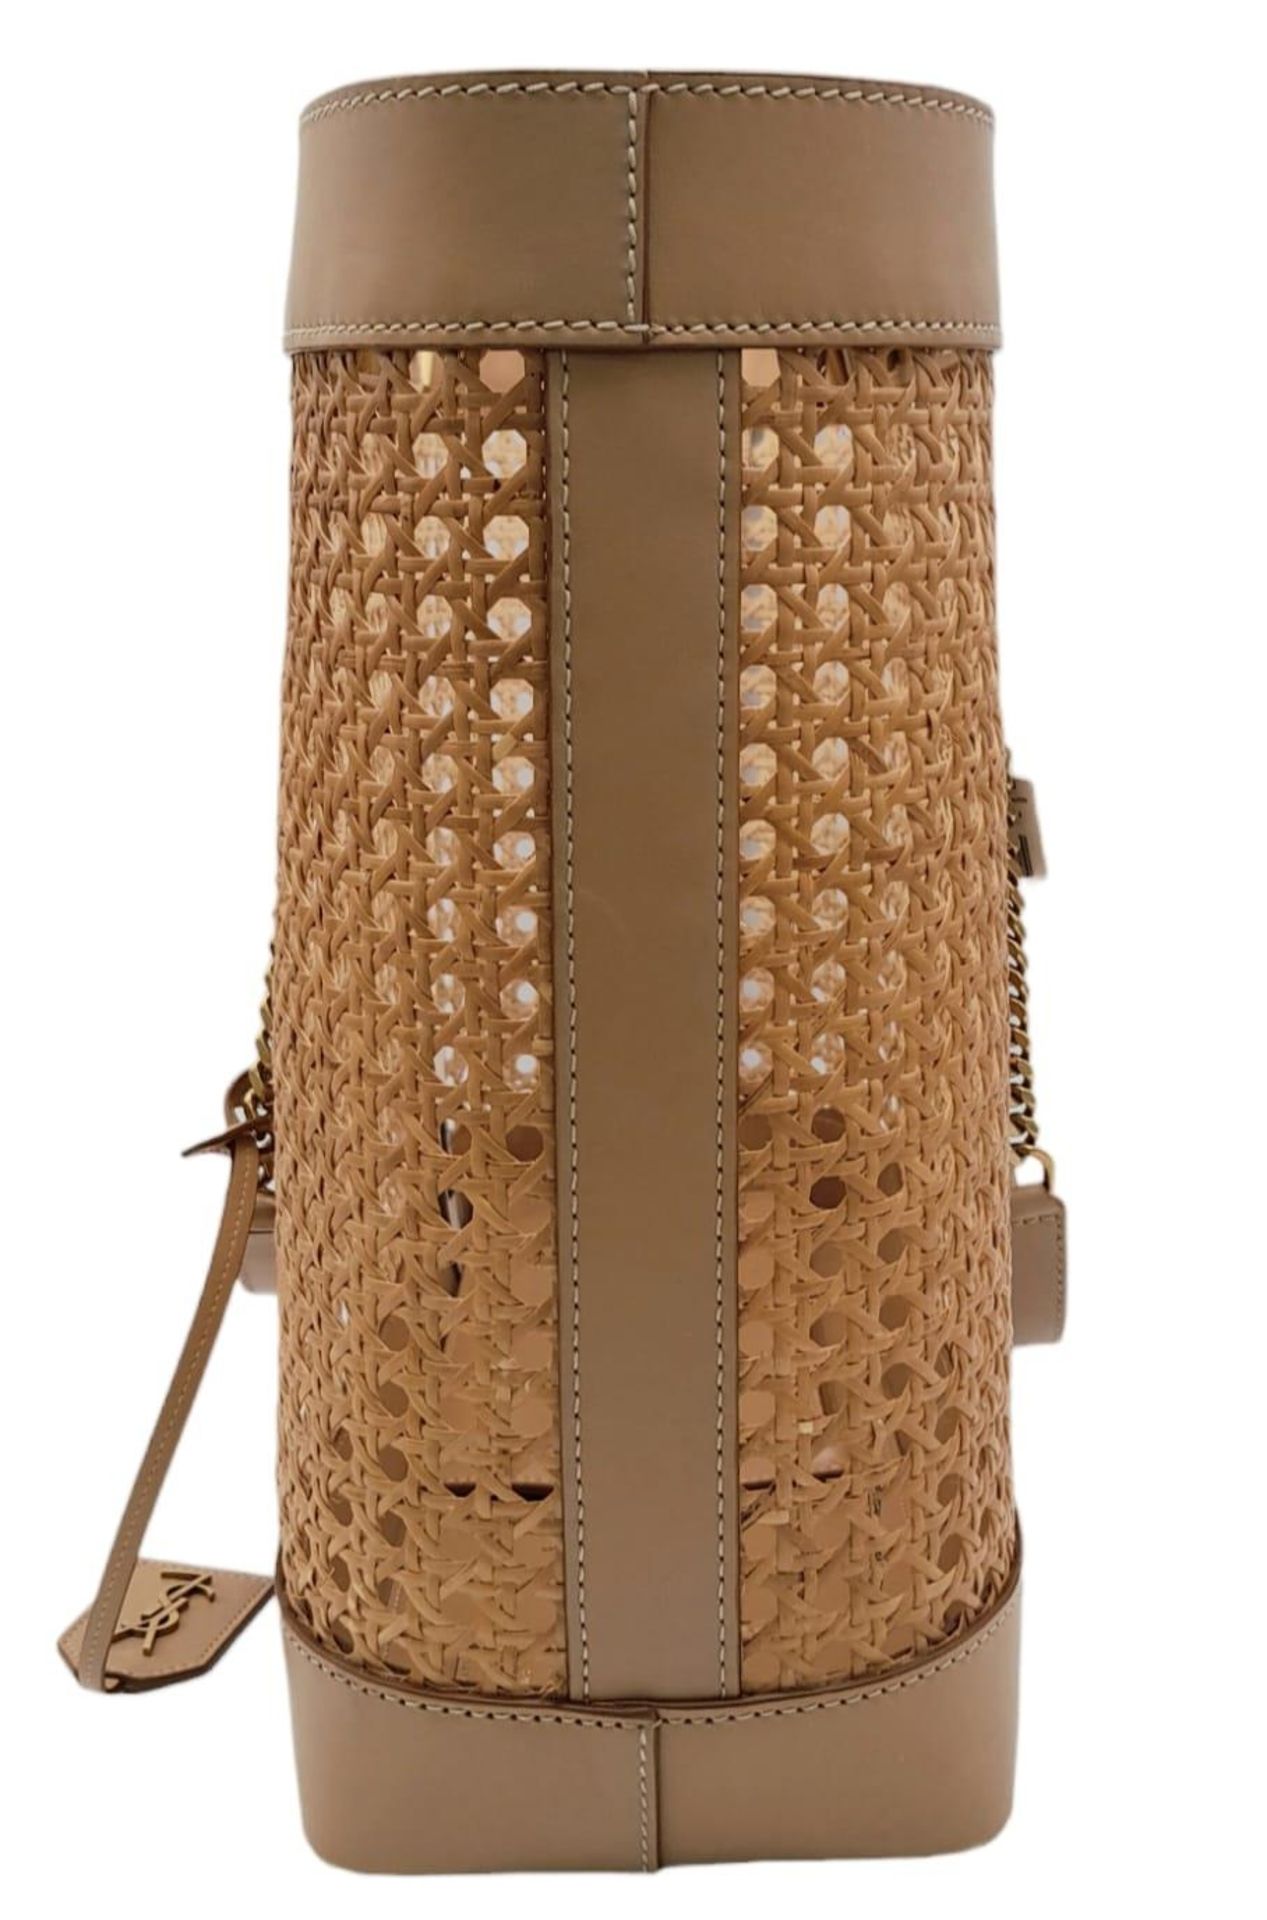 A Saint Laurent Beige Tote Bag. Woven rattan and leather trim exterior. Magnetic closure, gold-toned - Bild 4 aus 12